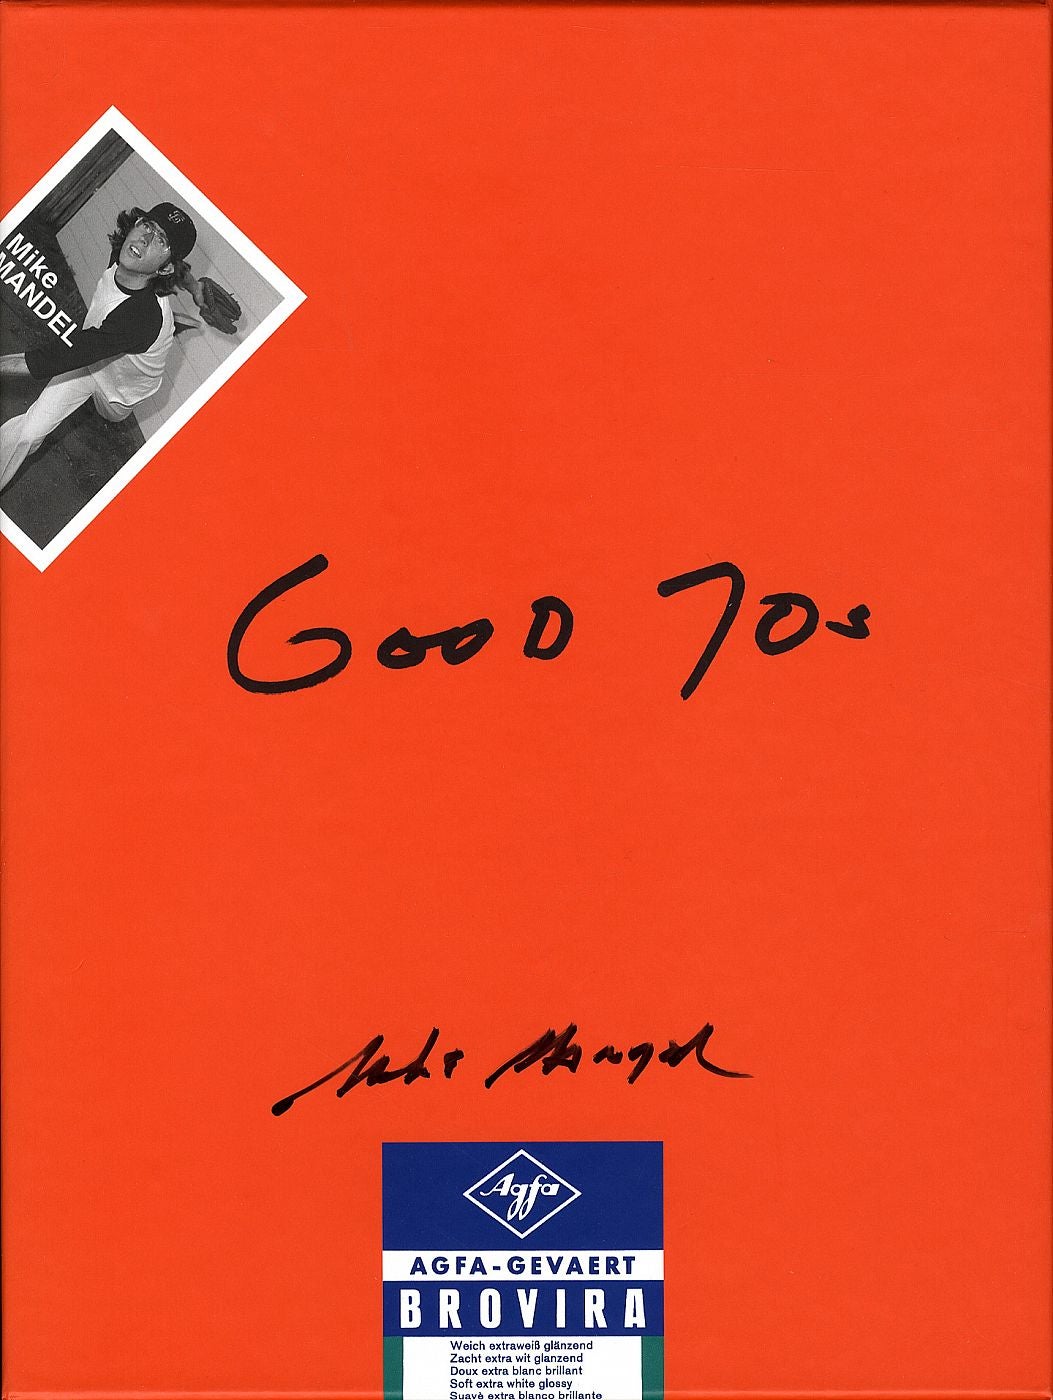 Mike Mandel: Good 70s (Includes Pack of 10 Vintage Photographer Baseball Cards) [SIGNED]